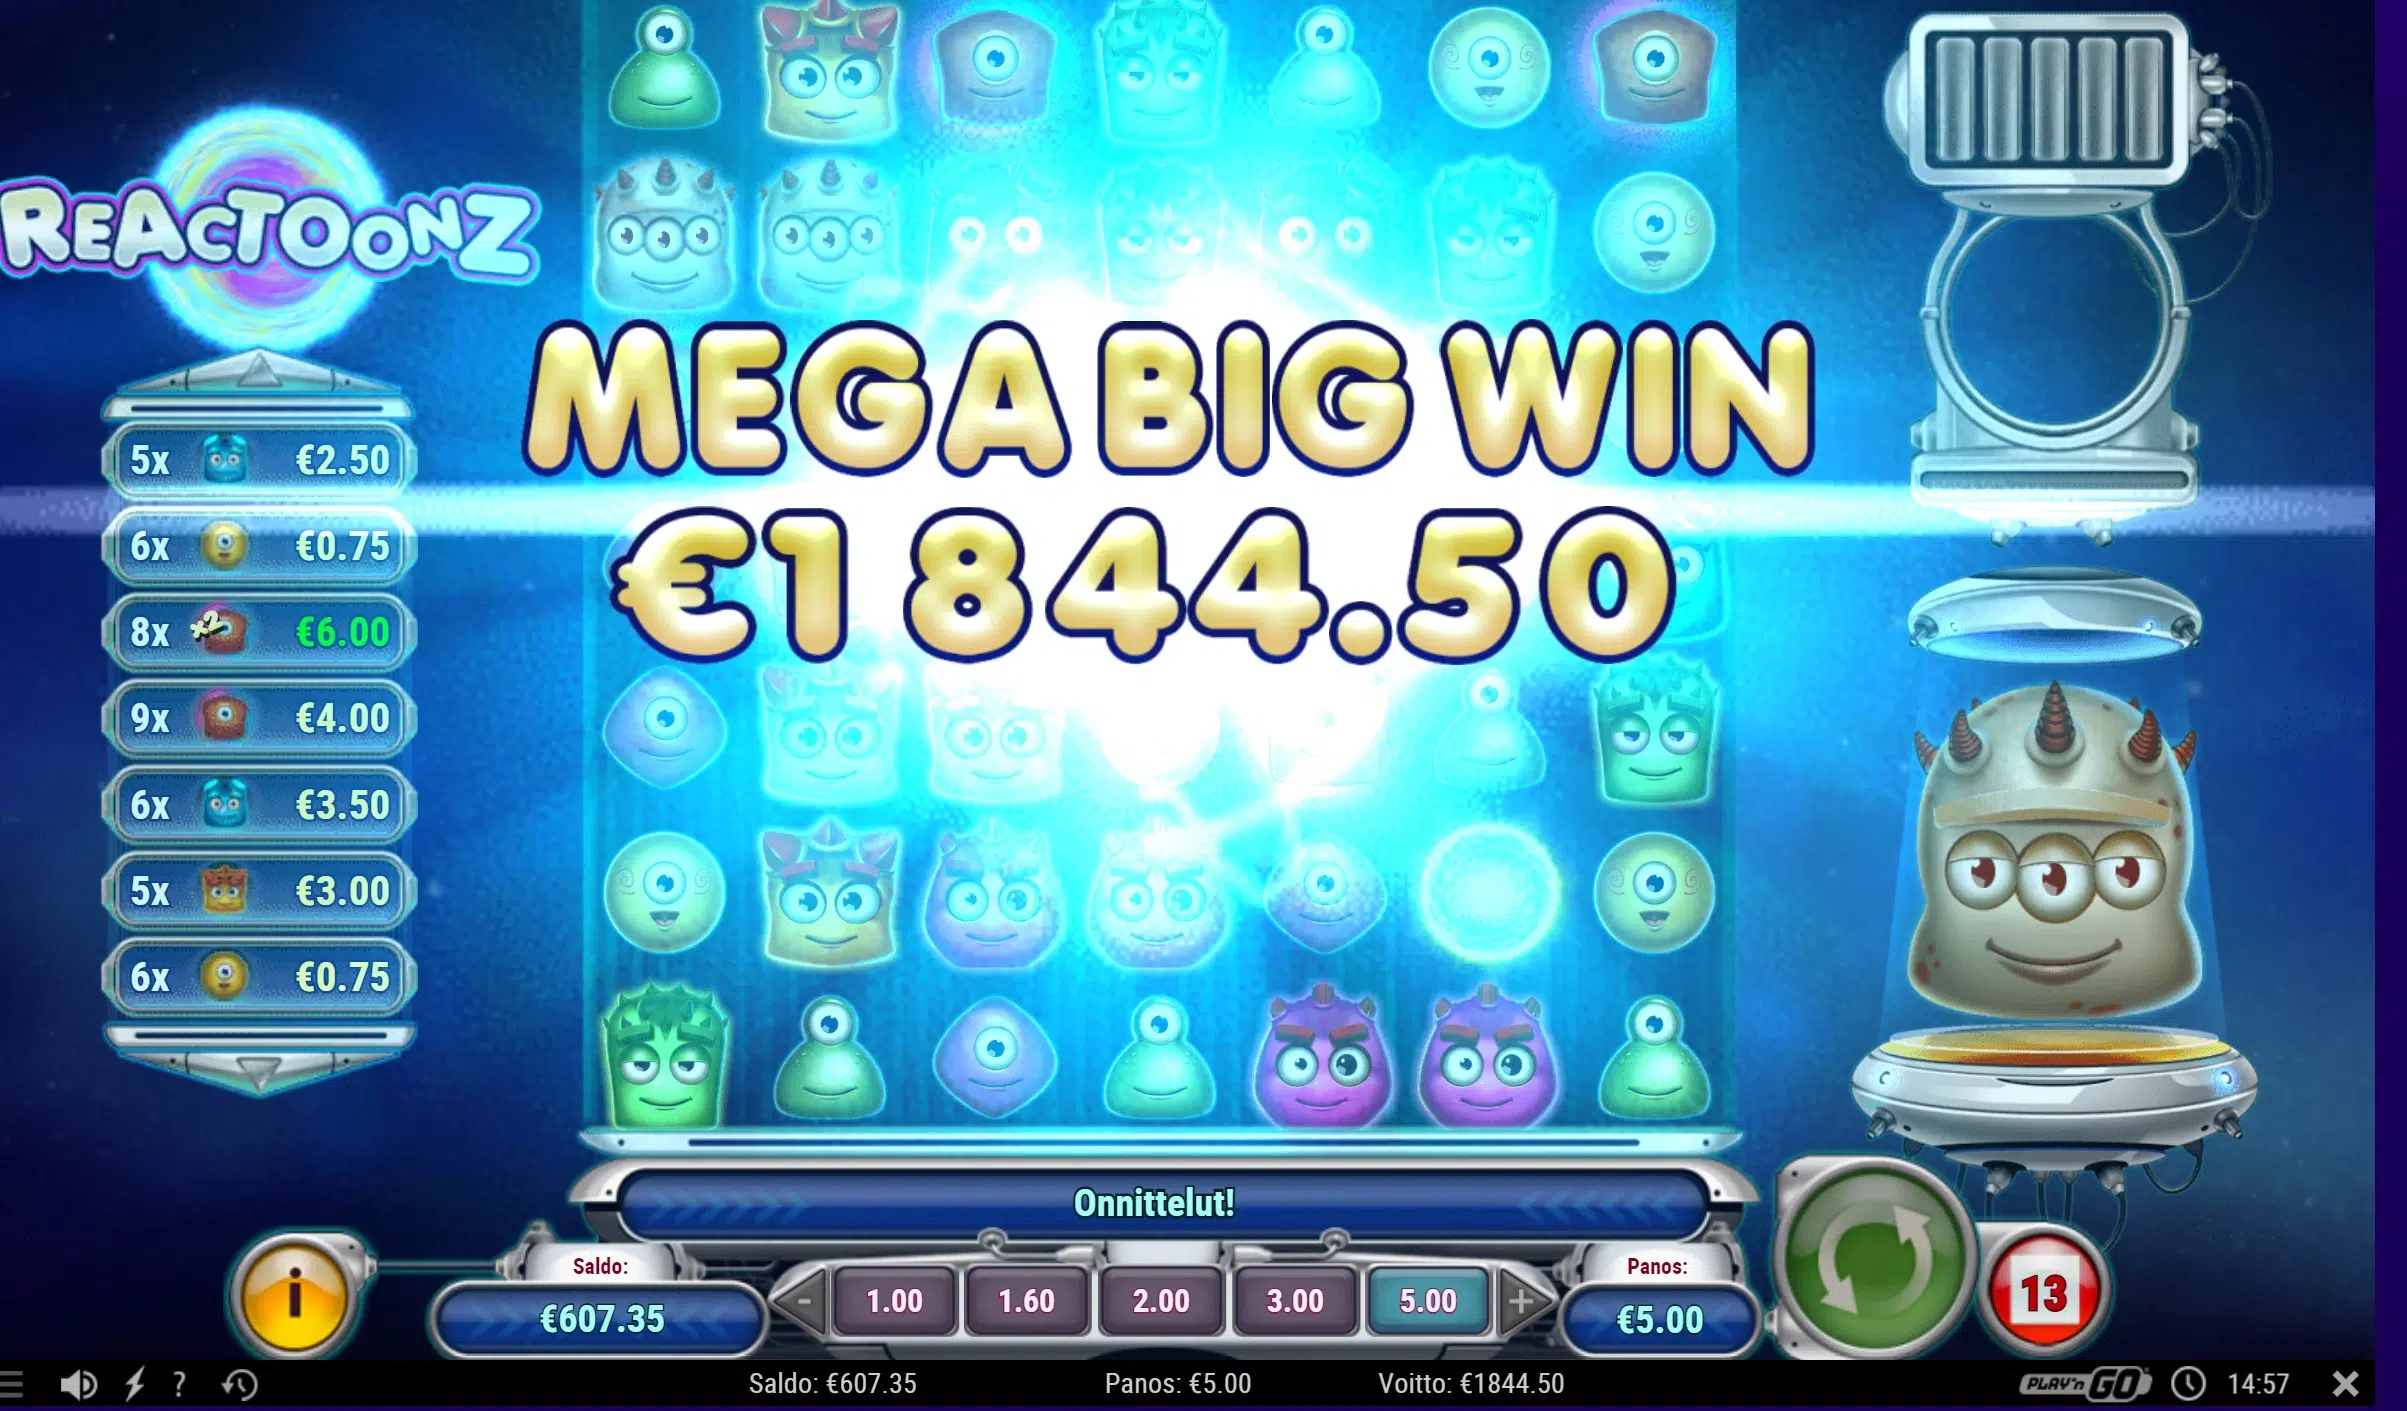 Big wins screenshot